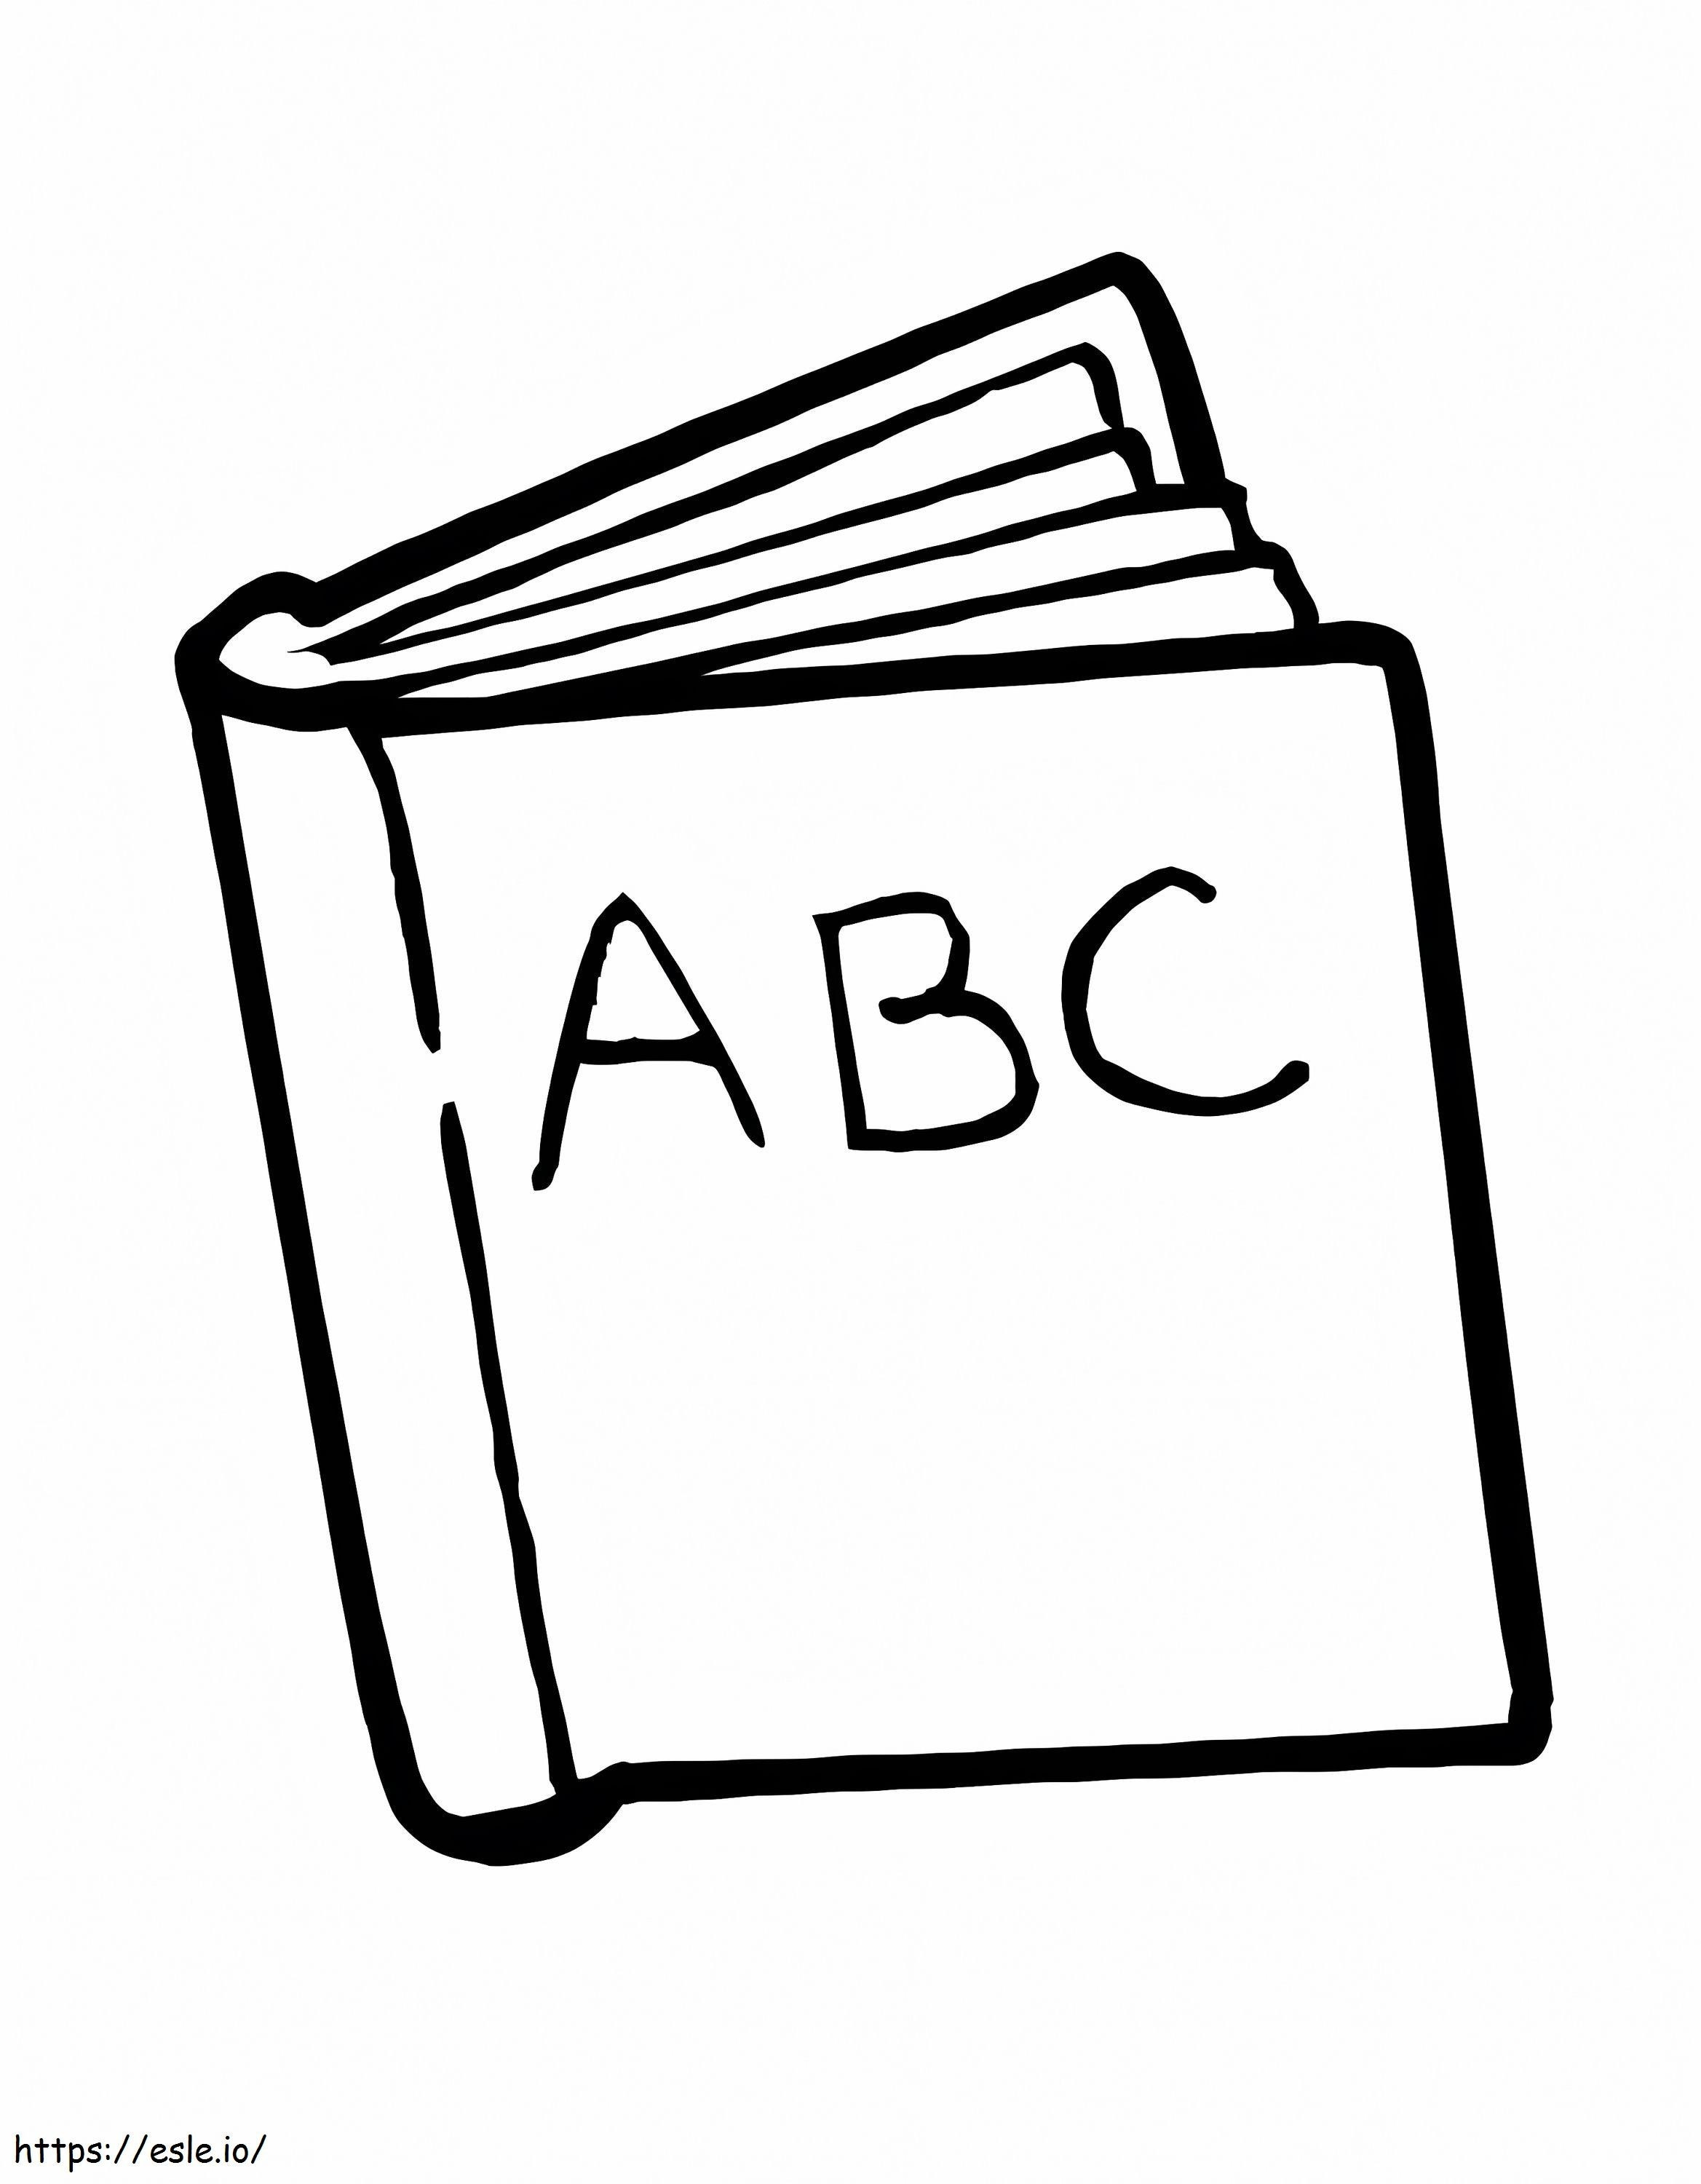 ABC-titelboek kleurplaat kleurplaat